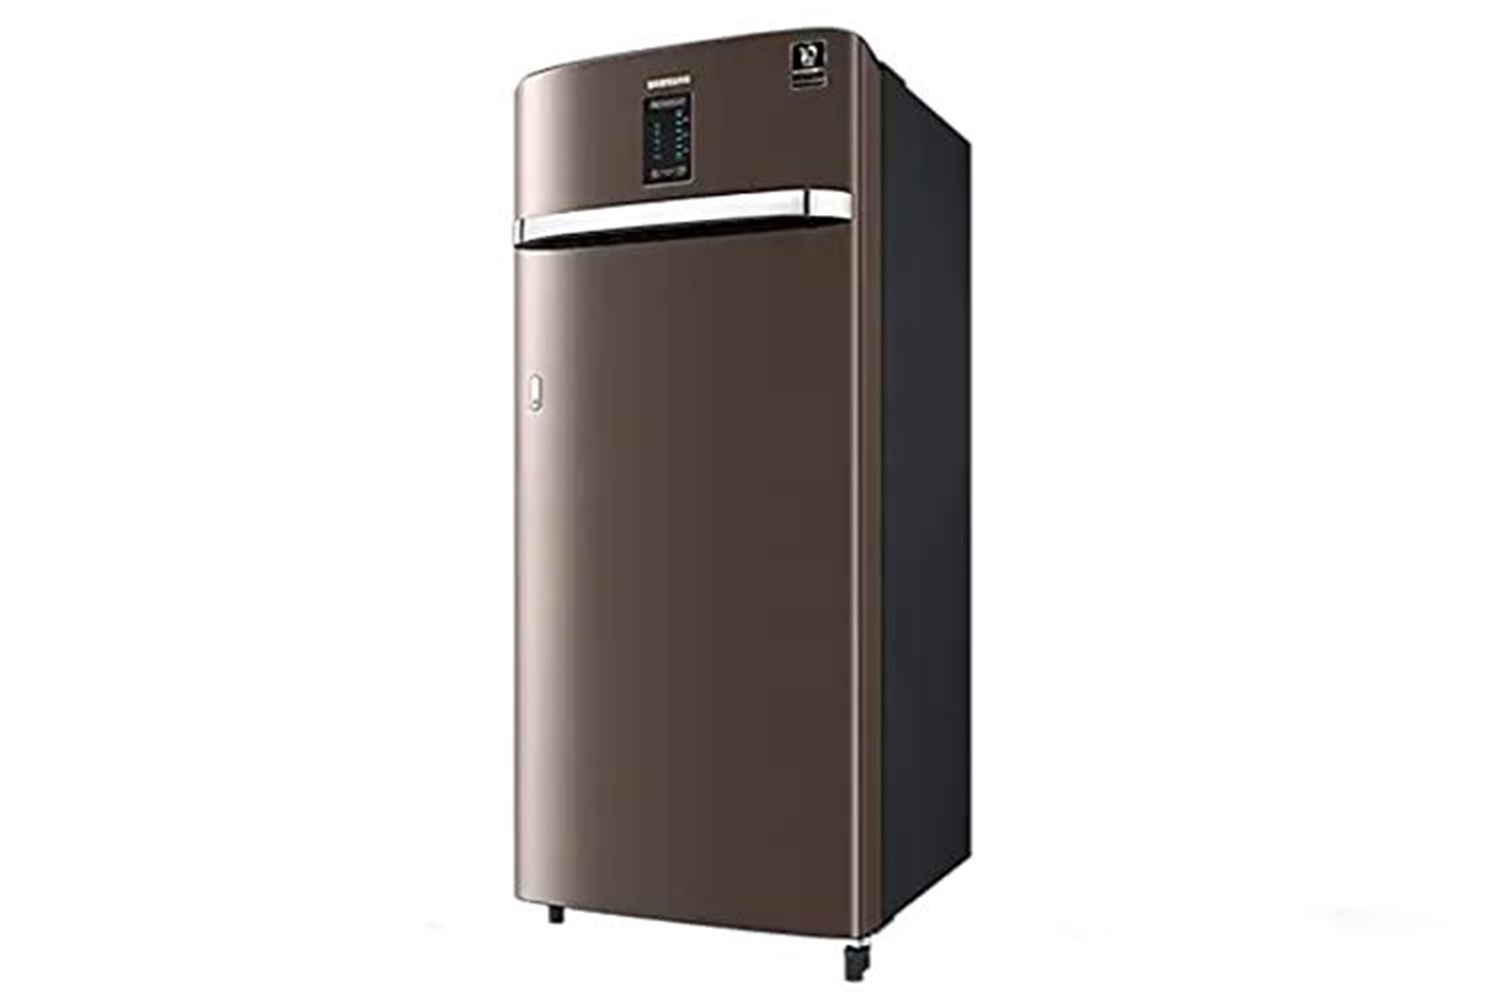 Samsung 198 L 3 Star inverter DC Single Door Refrigerator RR21A2E2YDX (Luxury Brown Color)